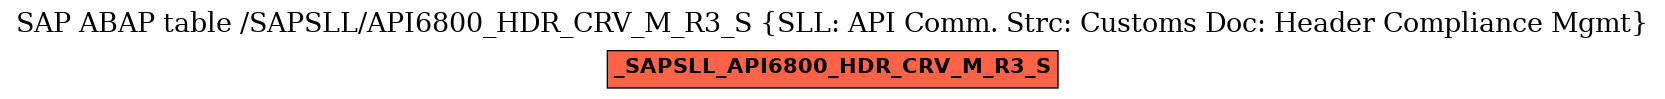 E-R Diagram for table /SAPSLL/API6800_HDR_CRV_M_R3_S (SLL: API Comm. Strc: Customs Doc: Header Compliance Mgmt)